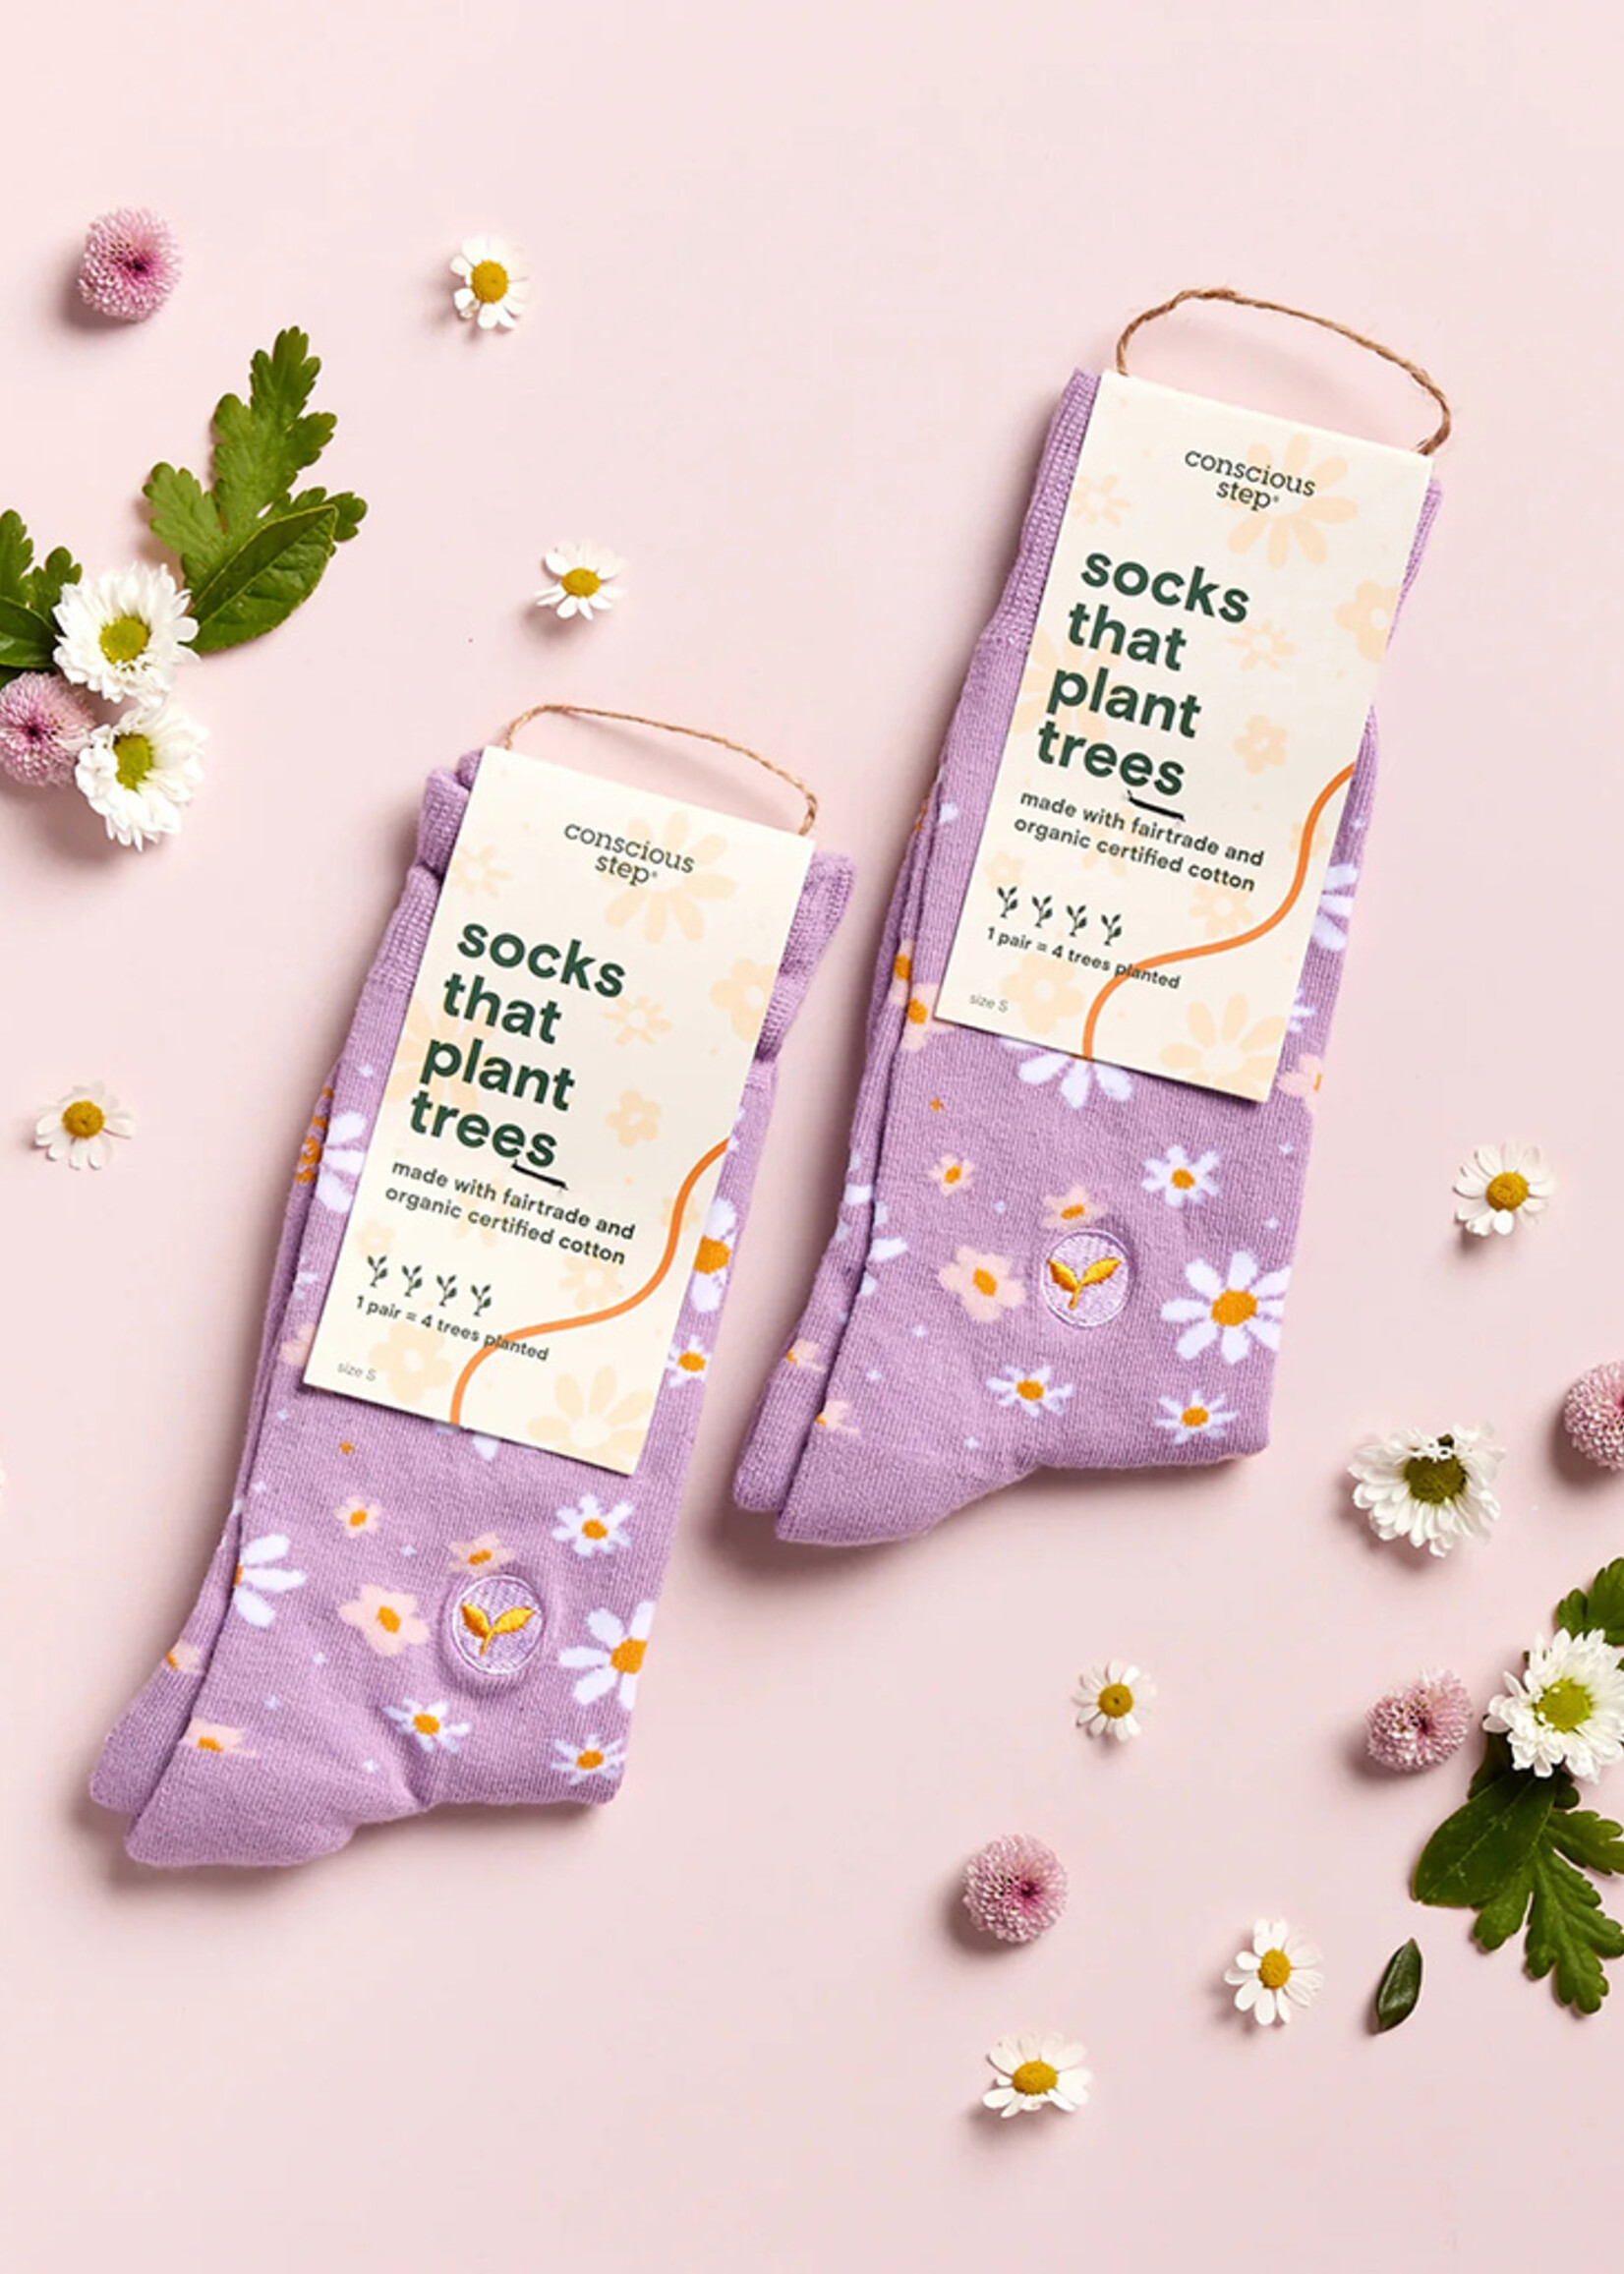 Conscious Step Men's Daisy Socks that Plant Trees